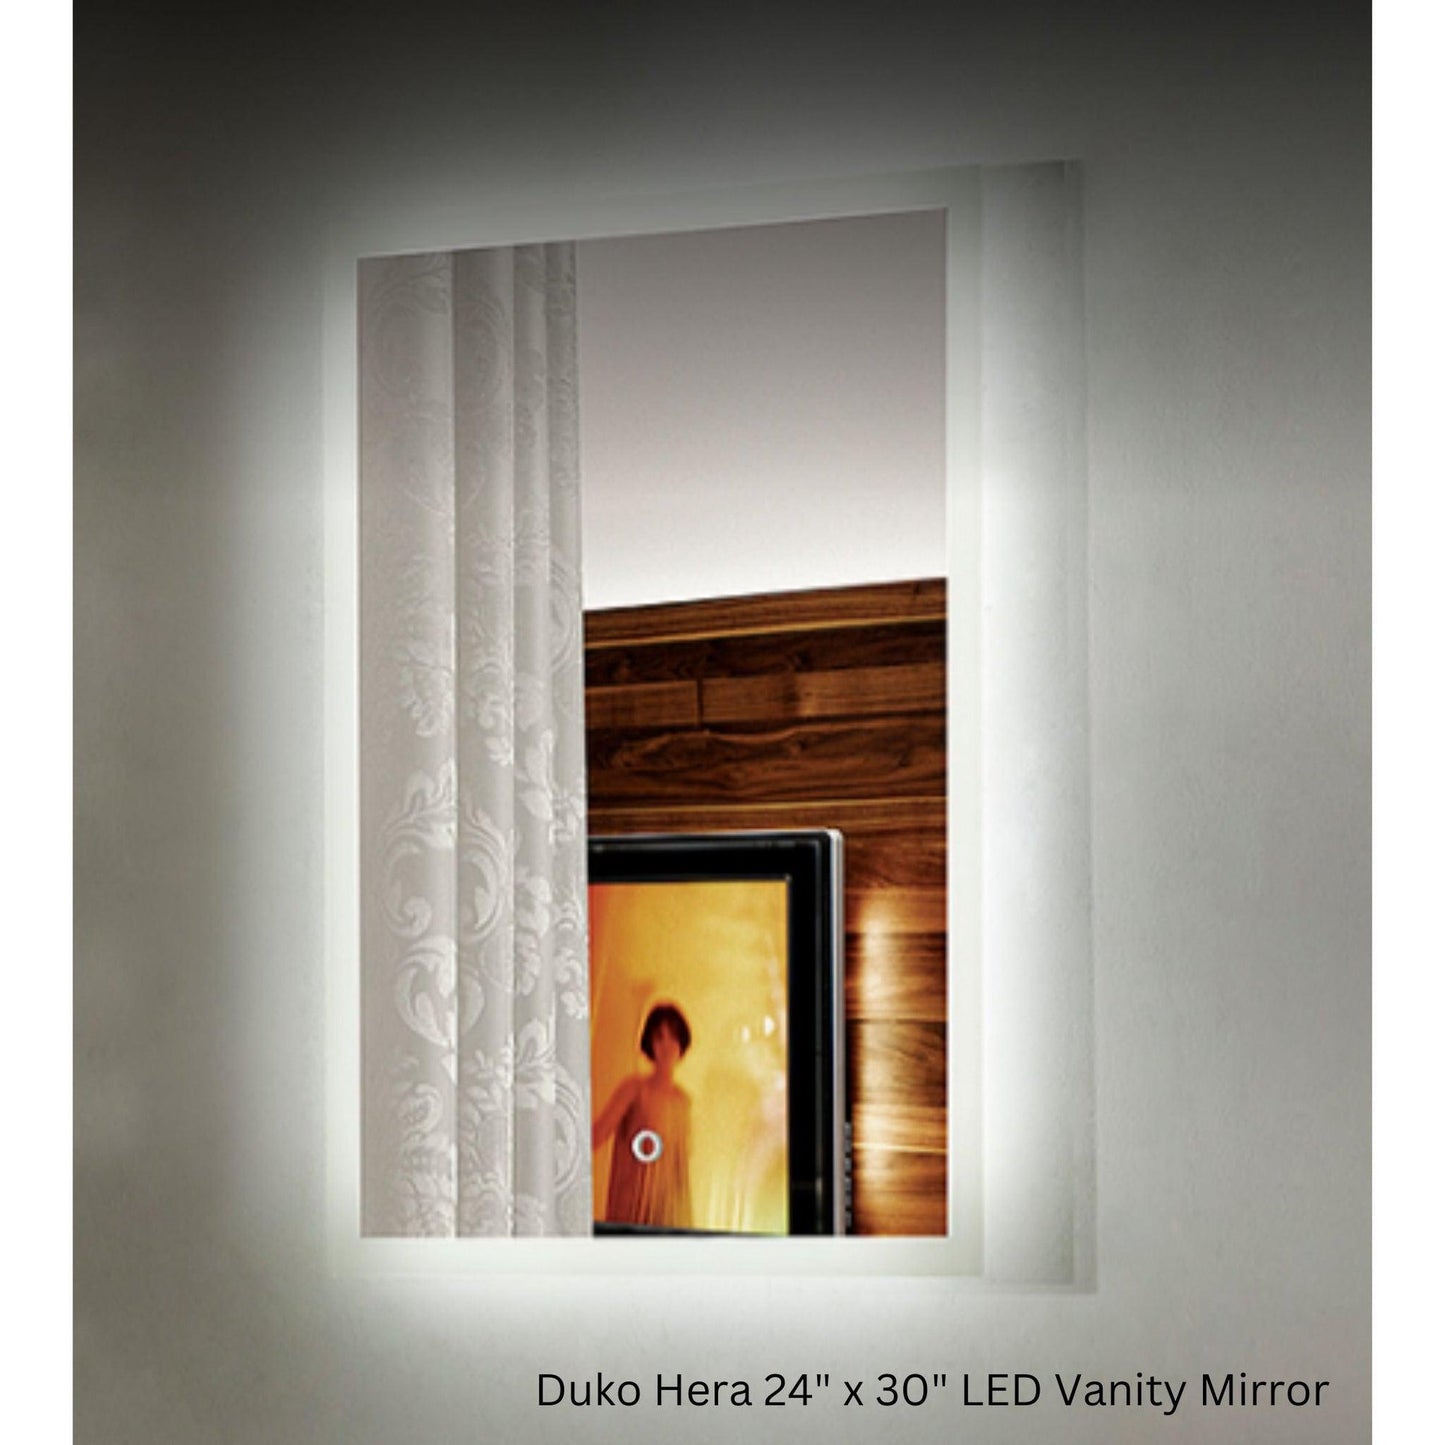 Duko Hera 36" x 30" Bathroom Vanity LED Mirror